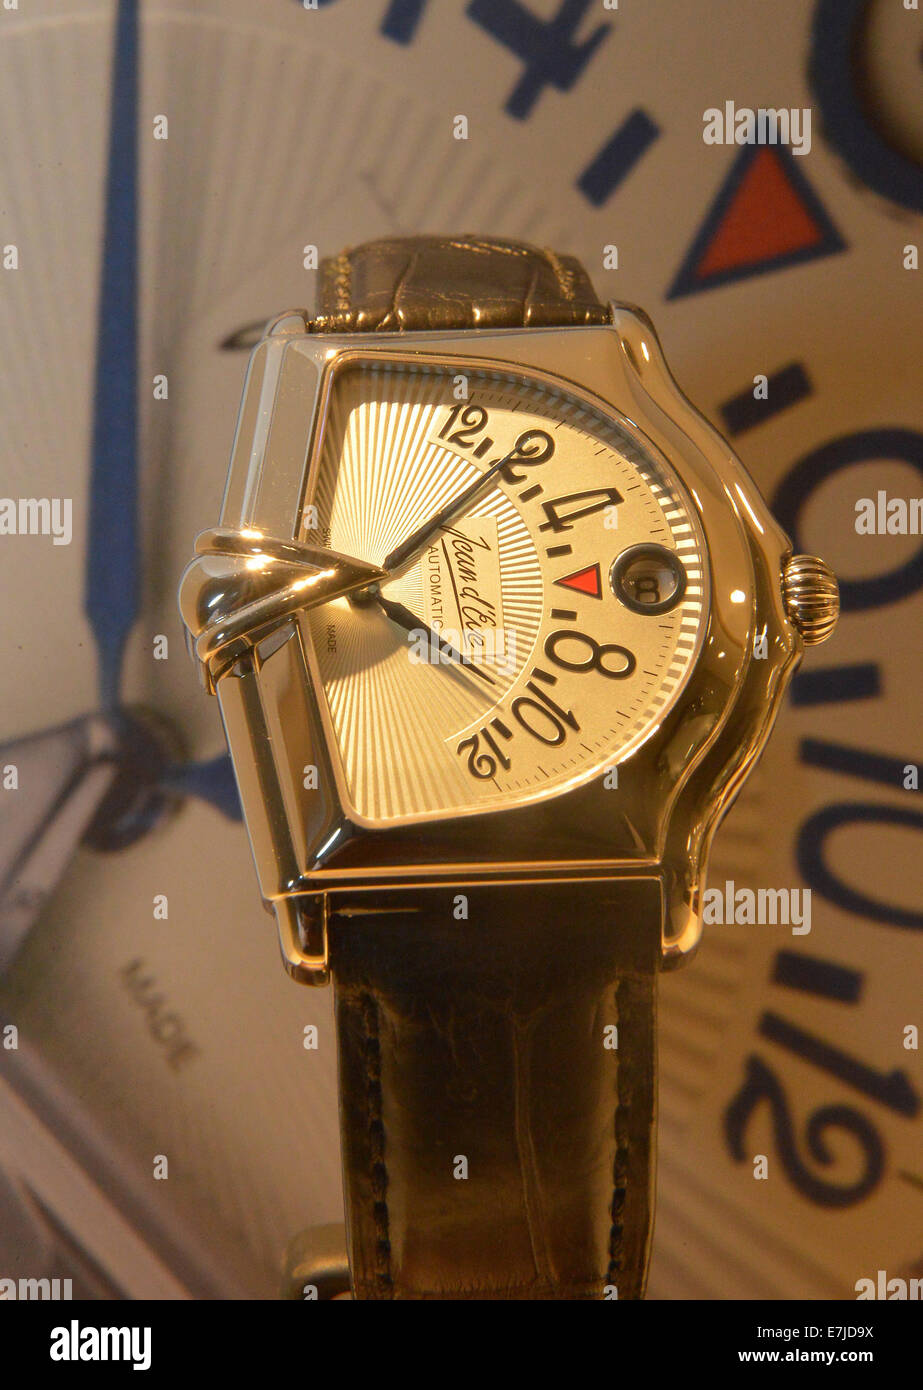 Clocks, Watches, clock, watch, luxury, Swiss, dial, Jean d'Eve, luxury clocks, fire, precious stones, wristwatch Stock Photo